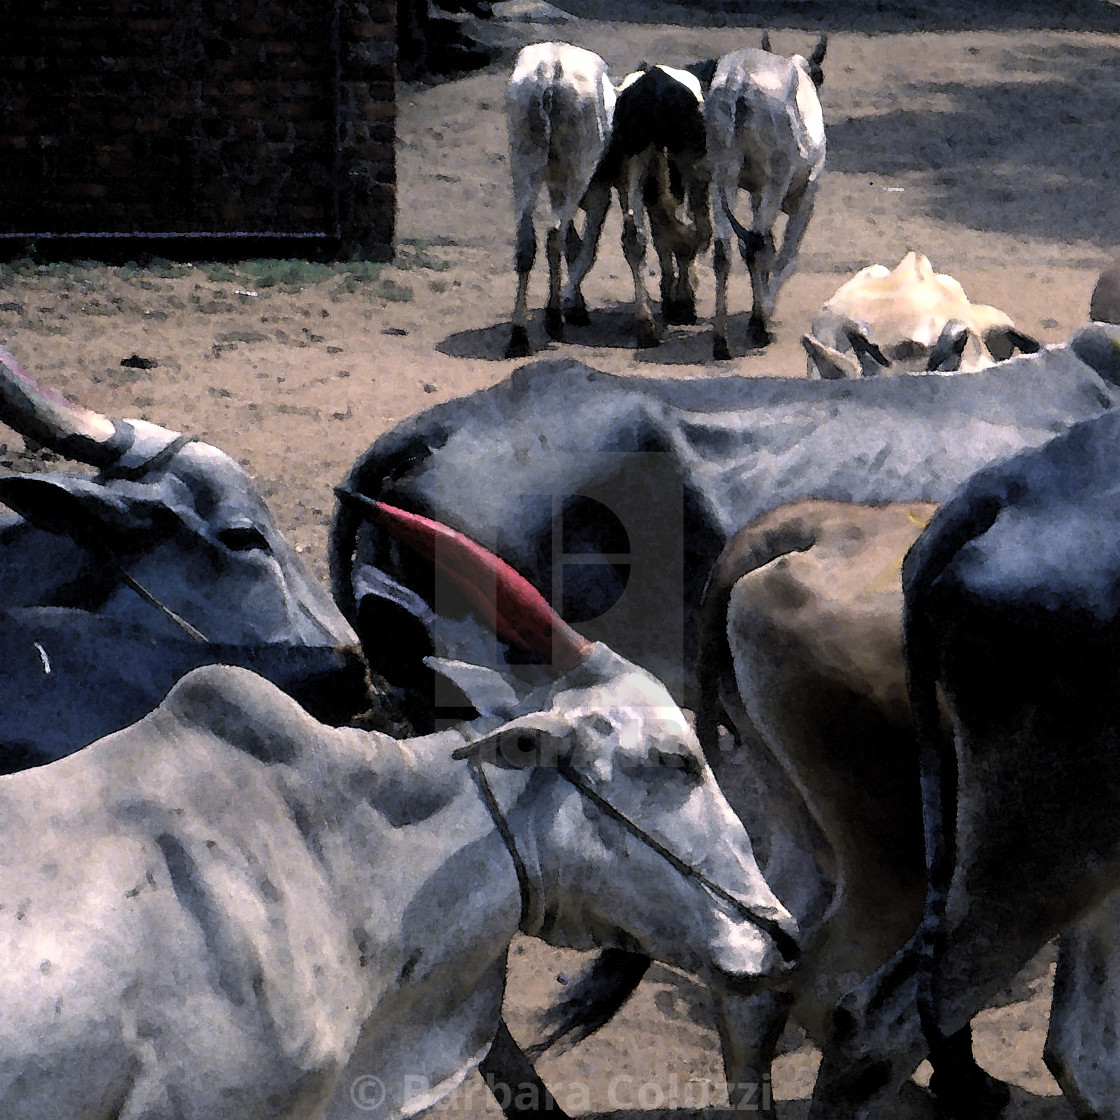 "Kerala, 1996: Cows" stock image